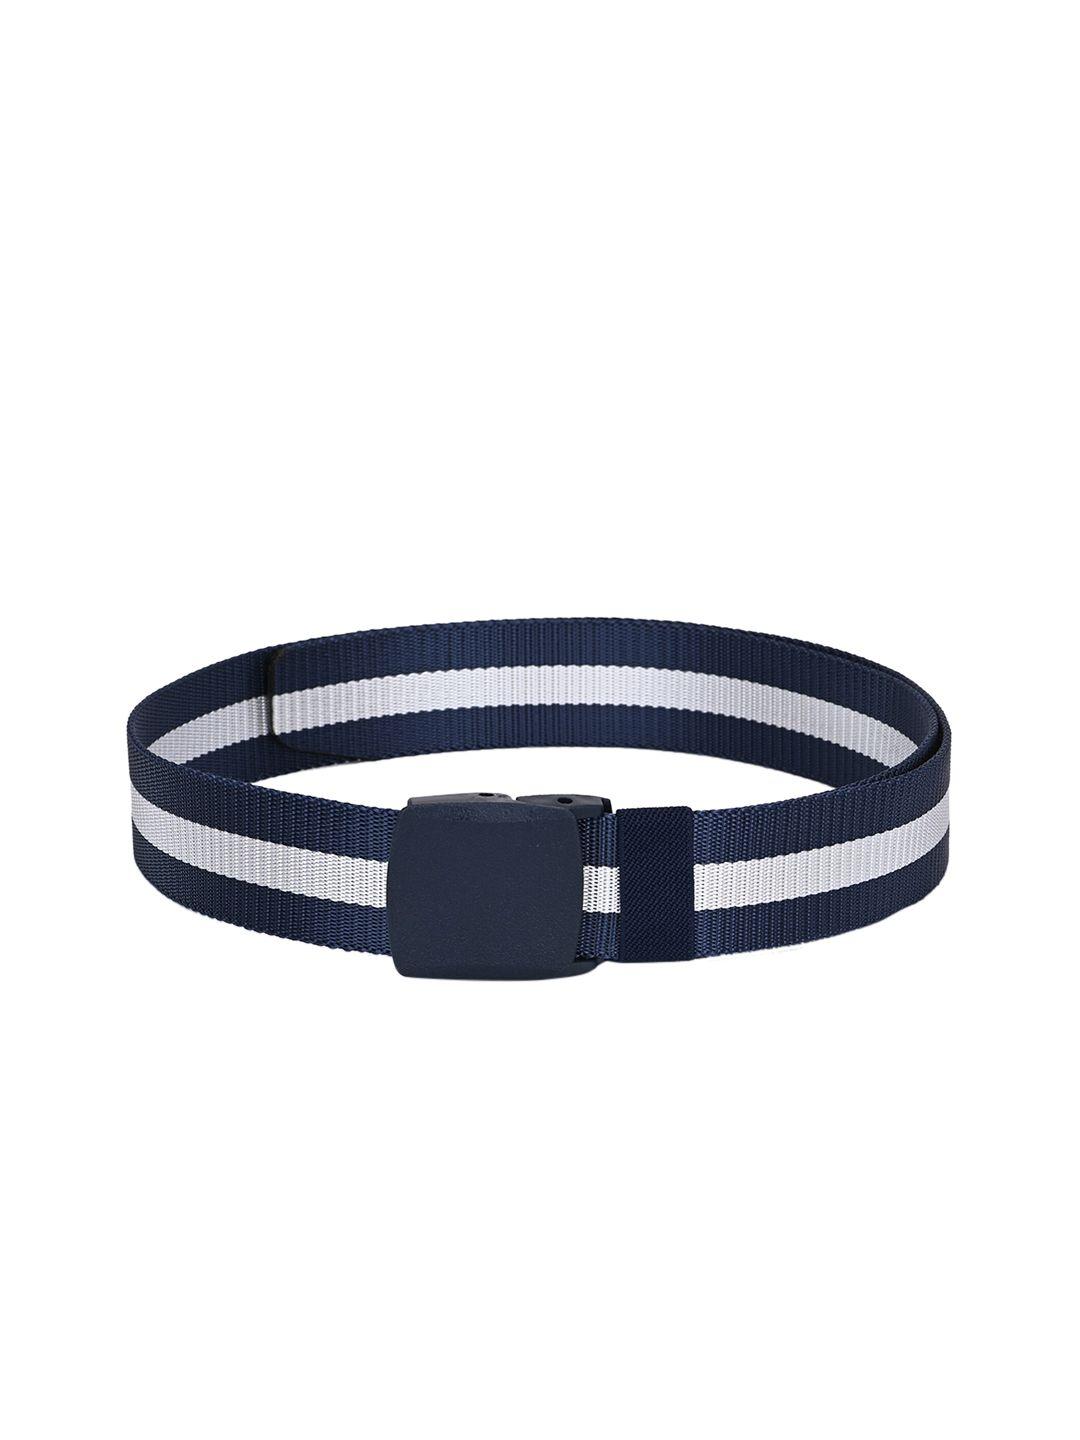 calvadoss men navy blue & white striped belt